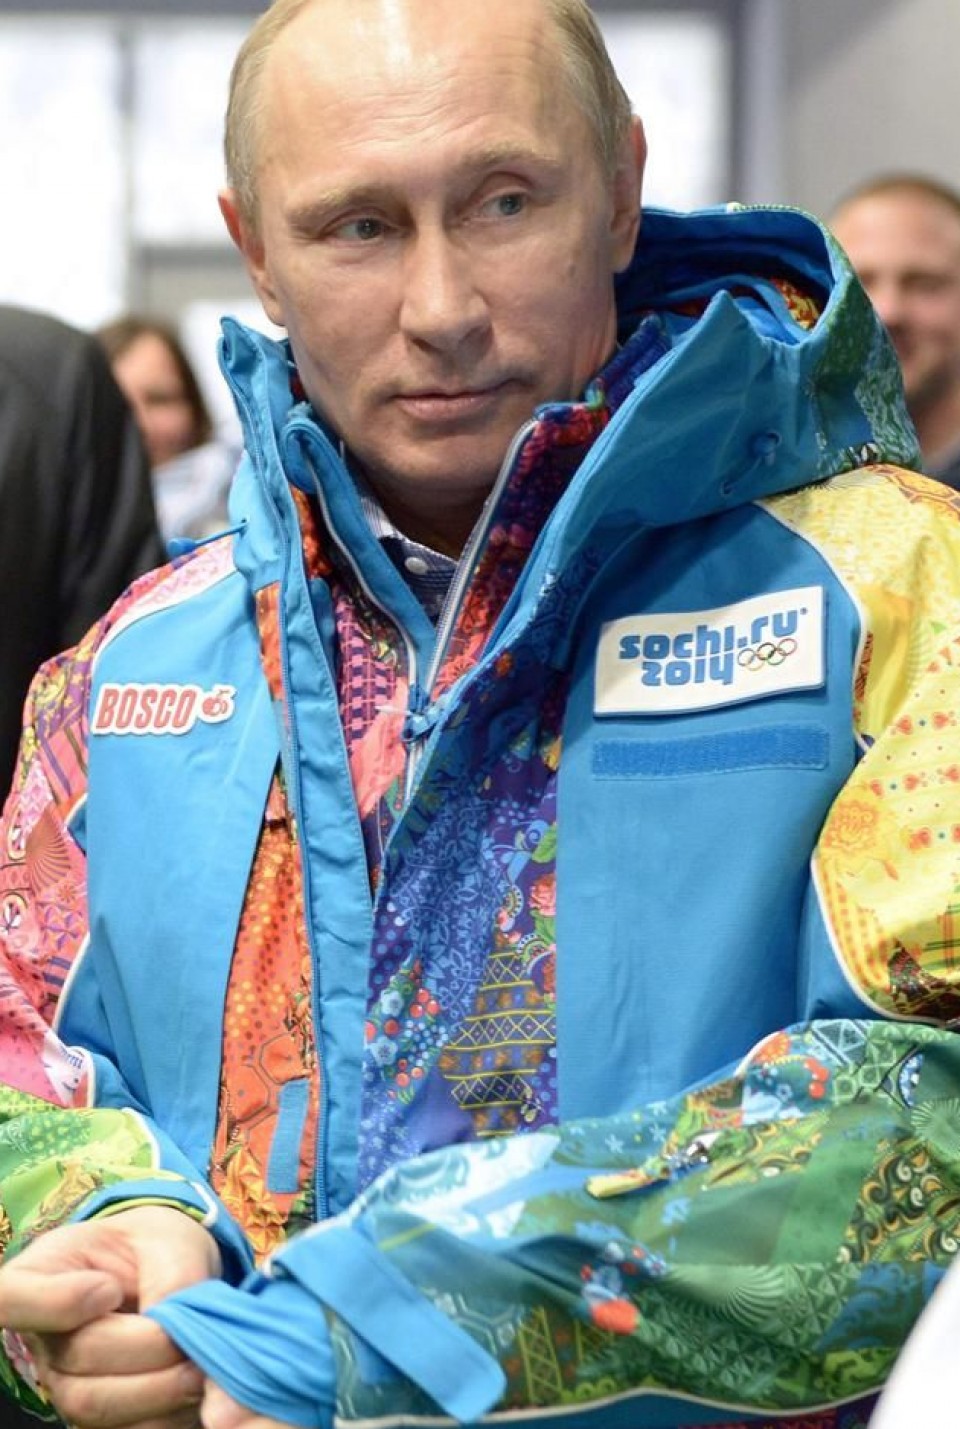 Vladimir Putin, presidente de Rusia. EFE